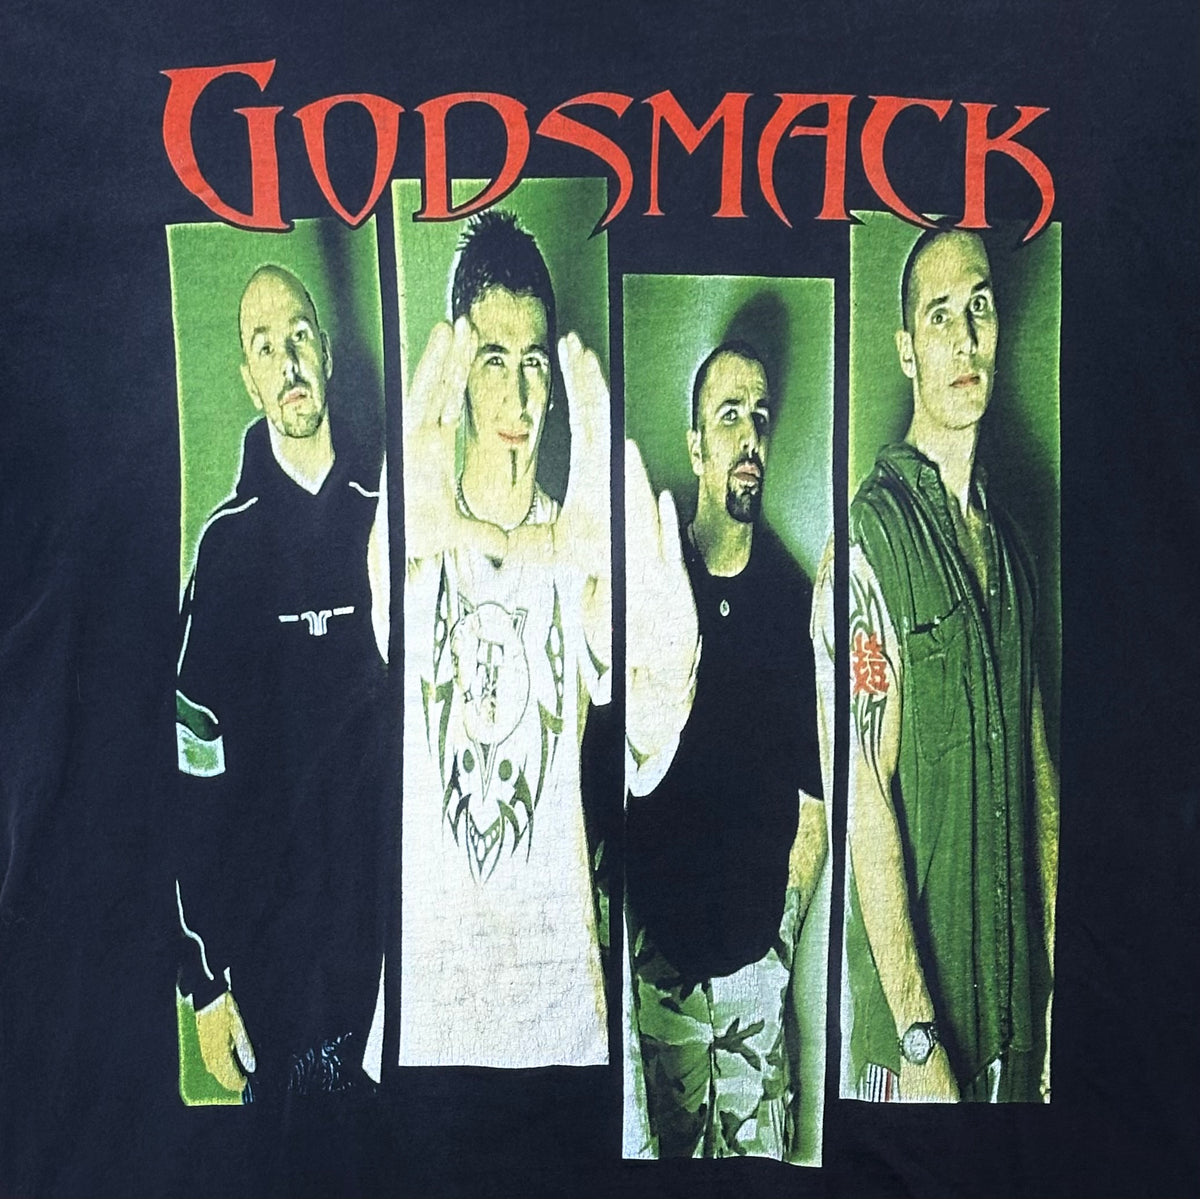 Vintage 90s Godsmack voodoo tour t-shirt